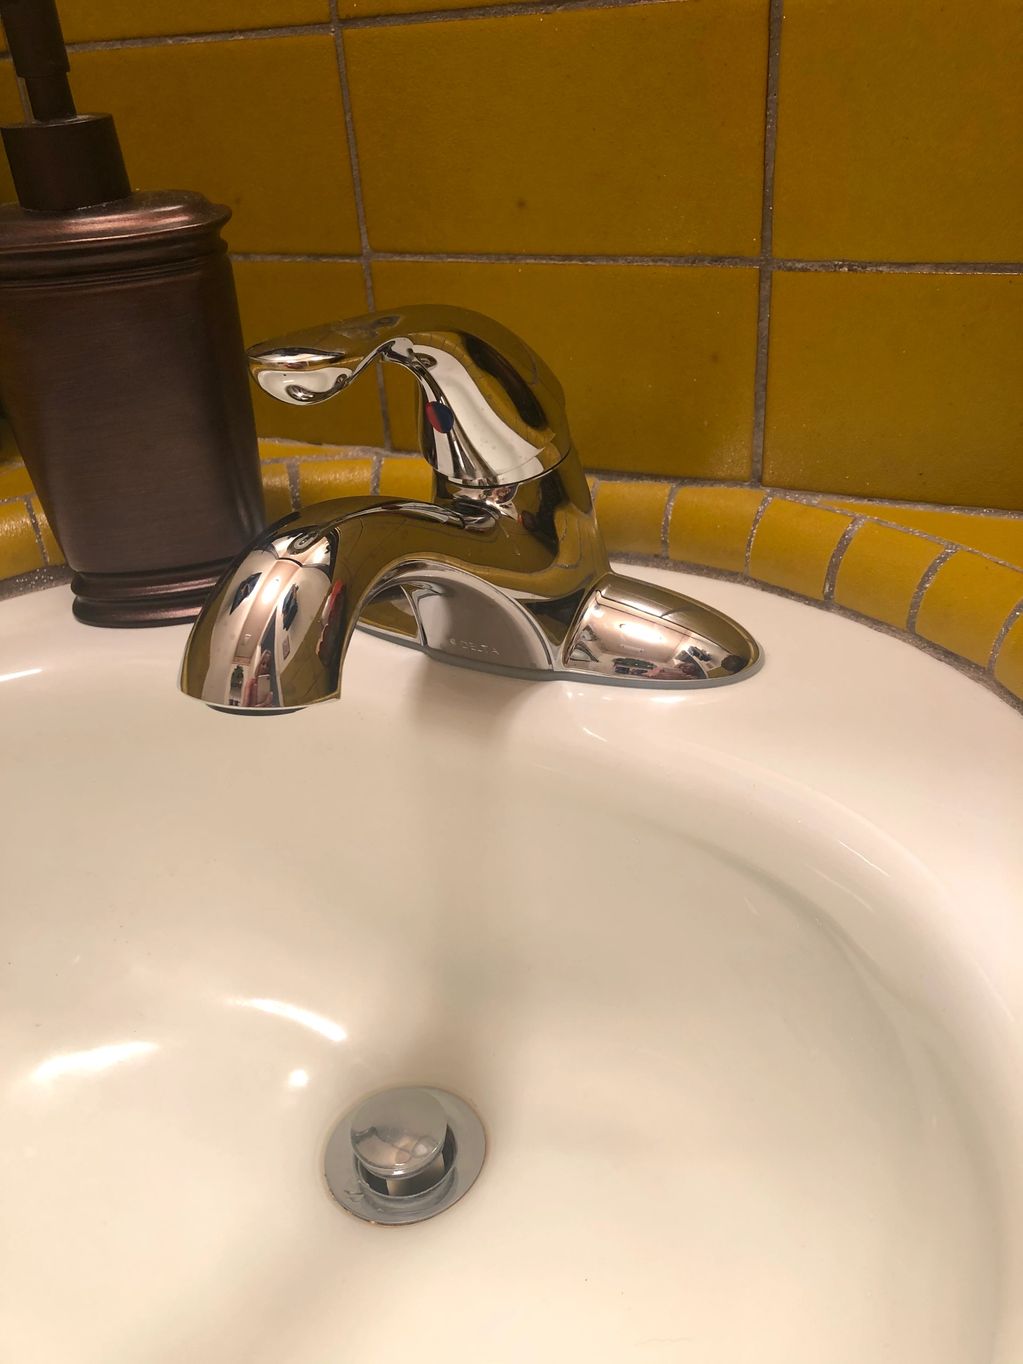 Fix leaky faucet, replace faucet